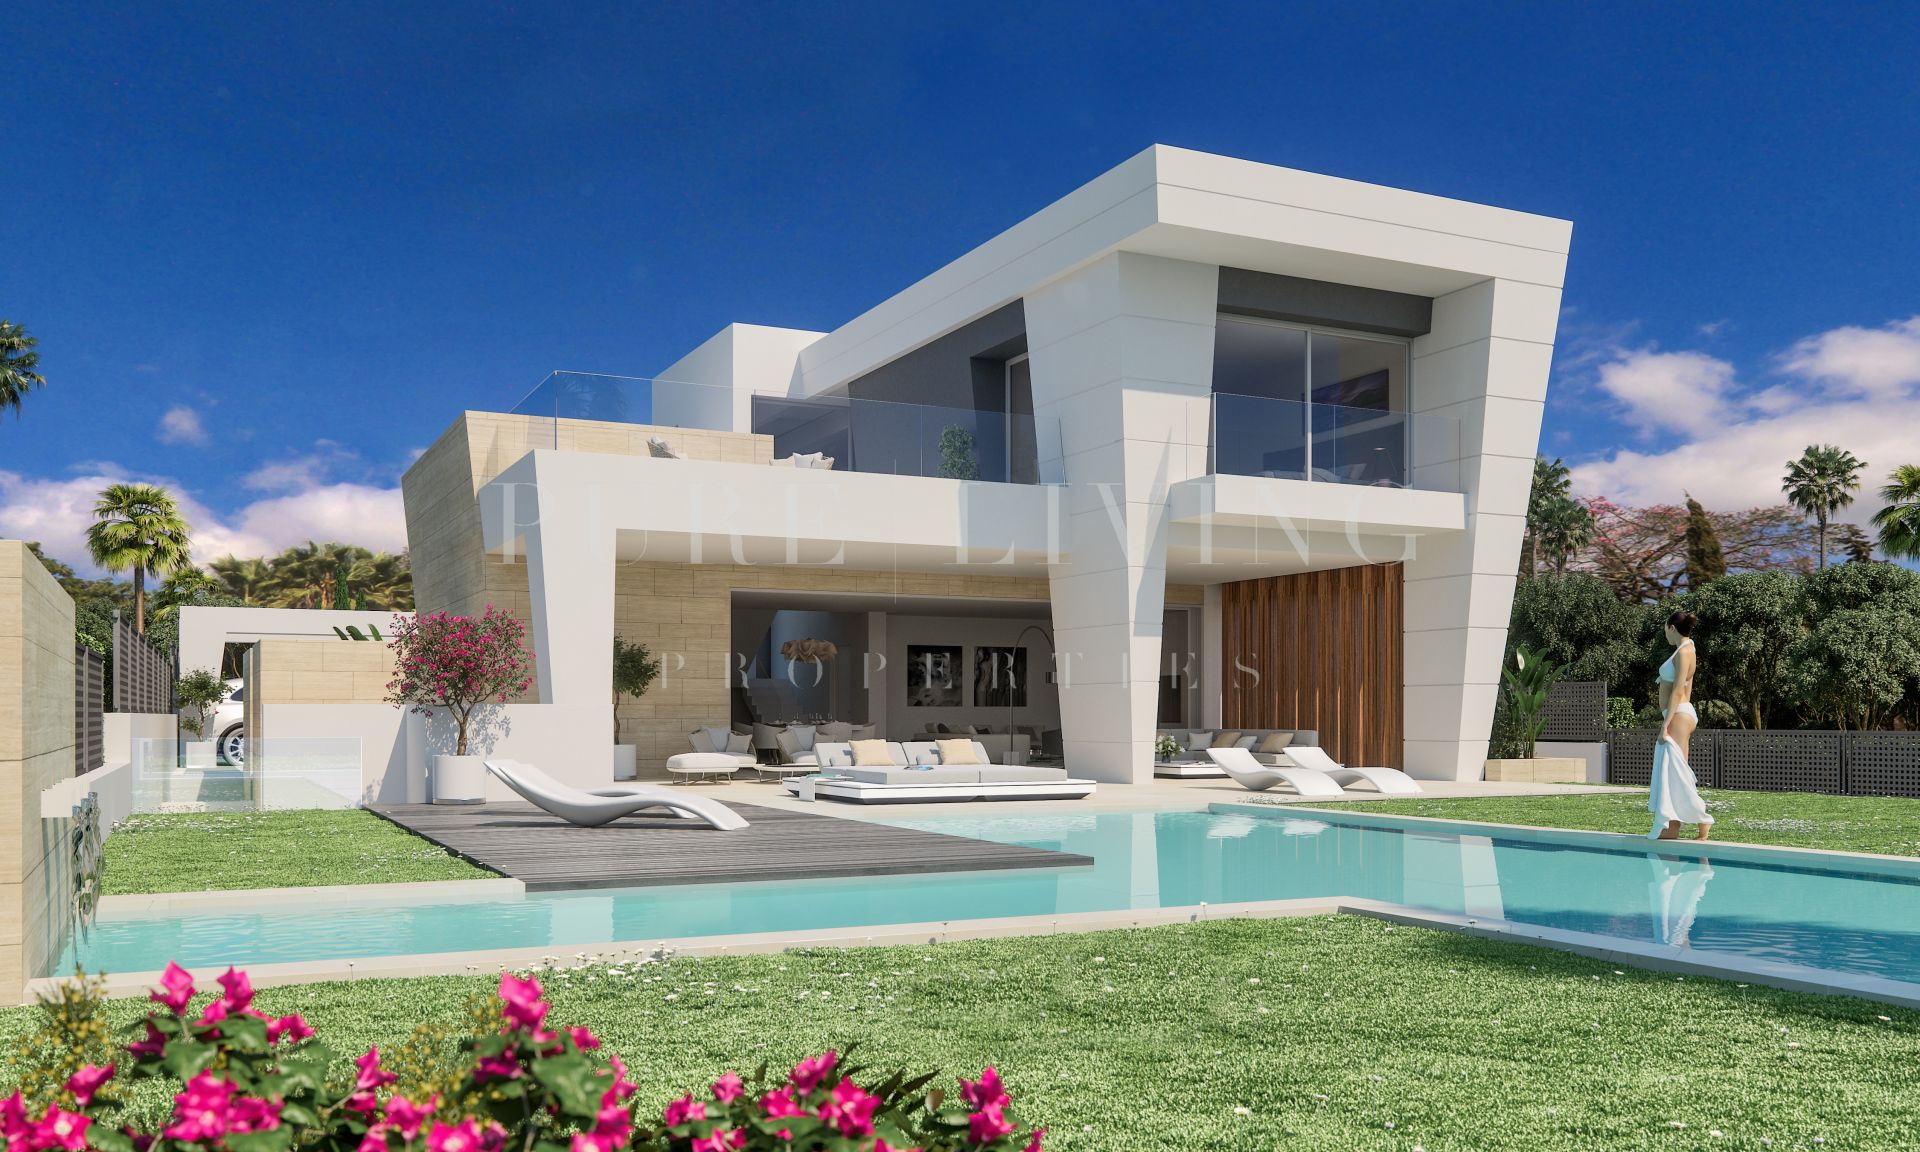 Spectacular off-plan modern villa project in Nagueles